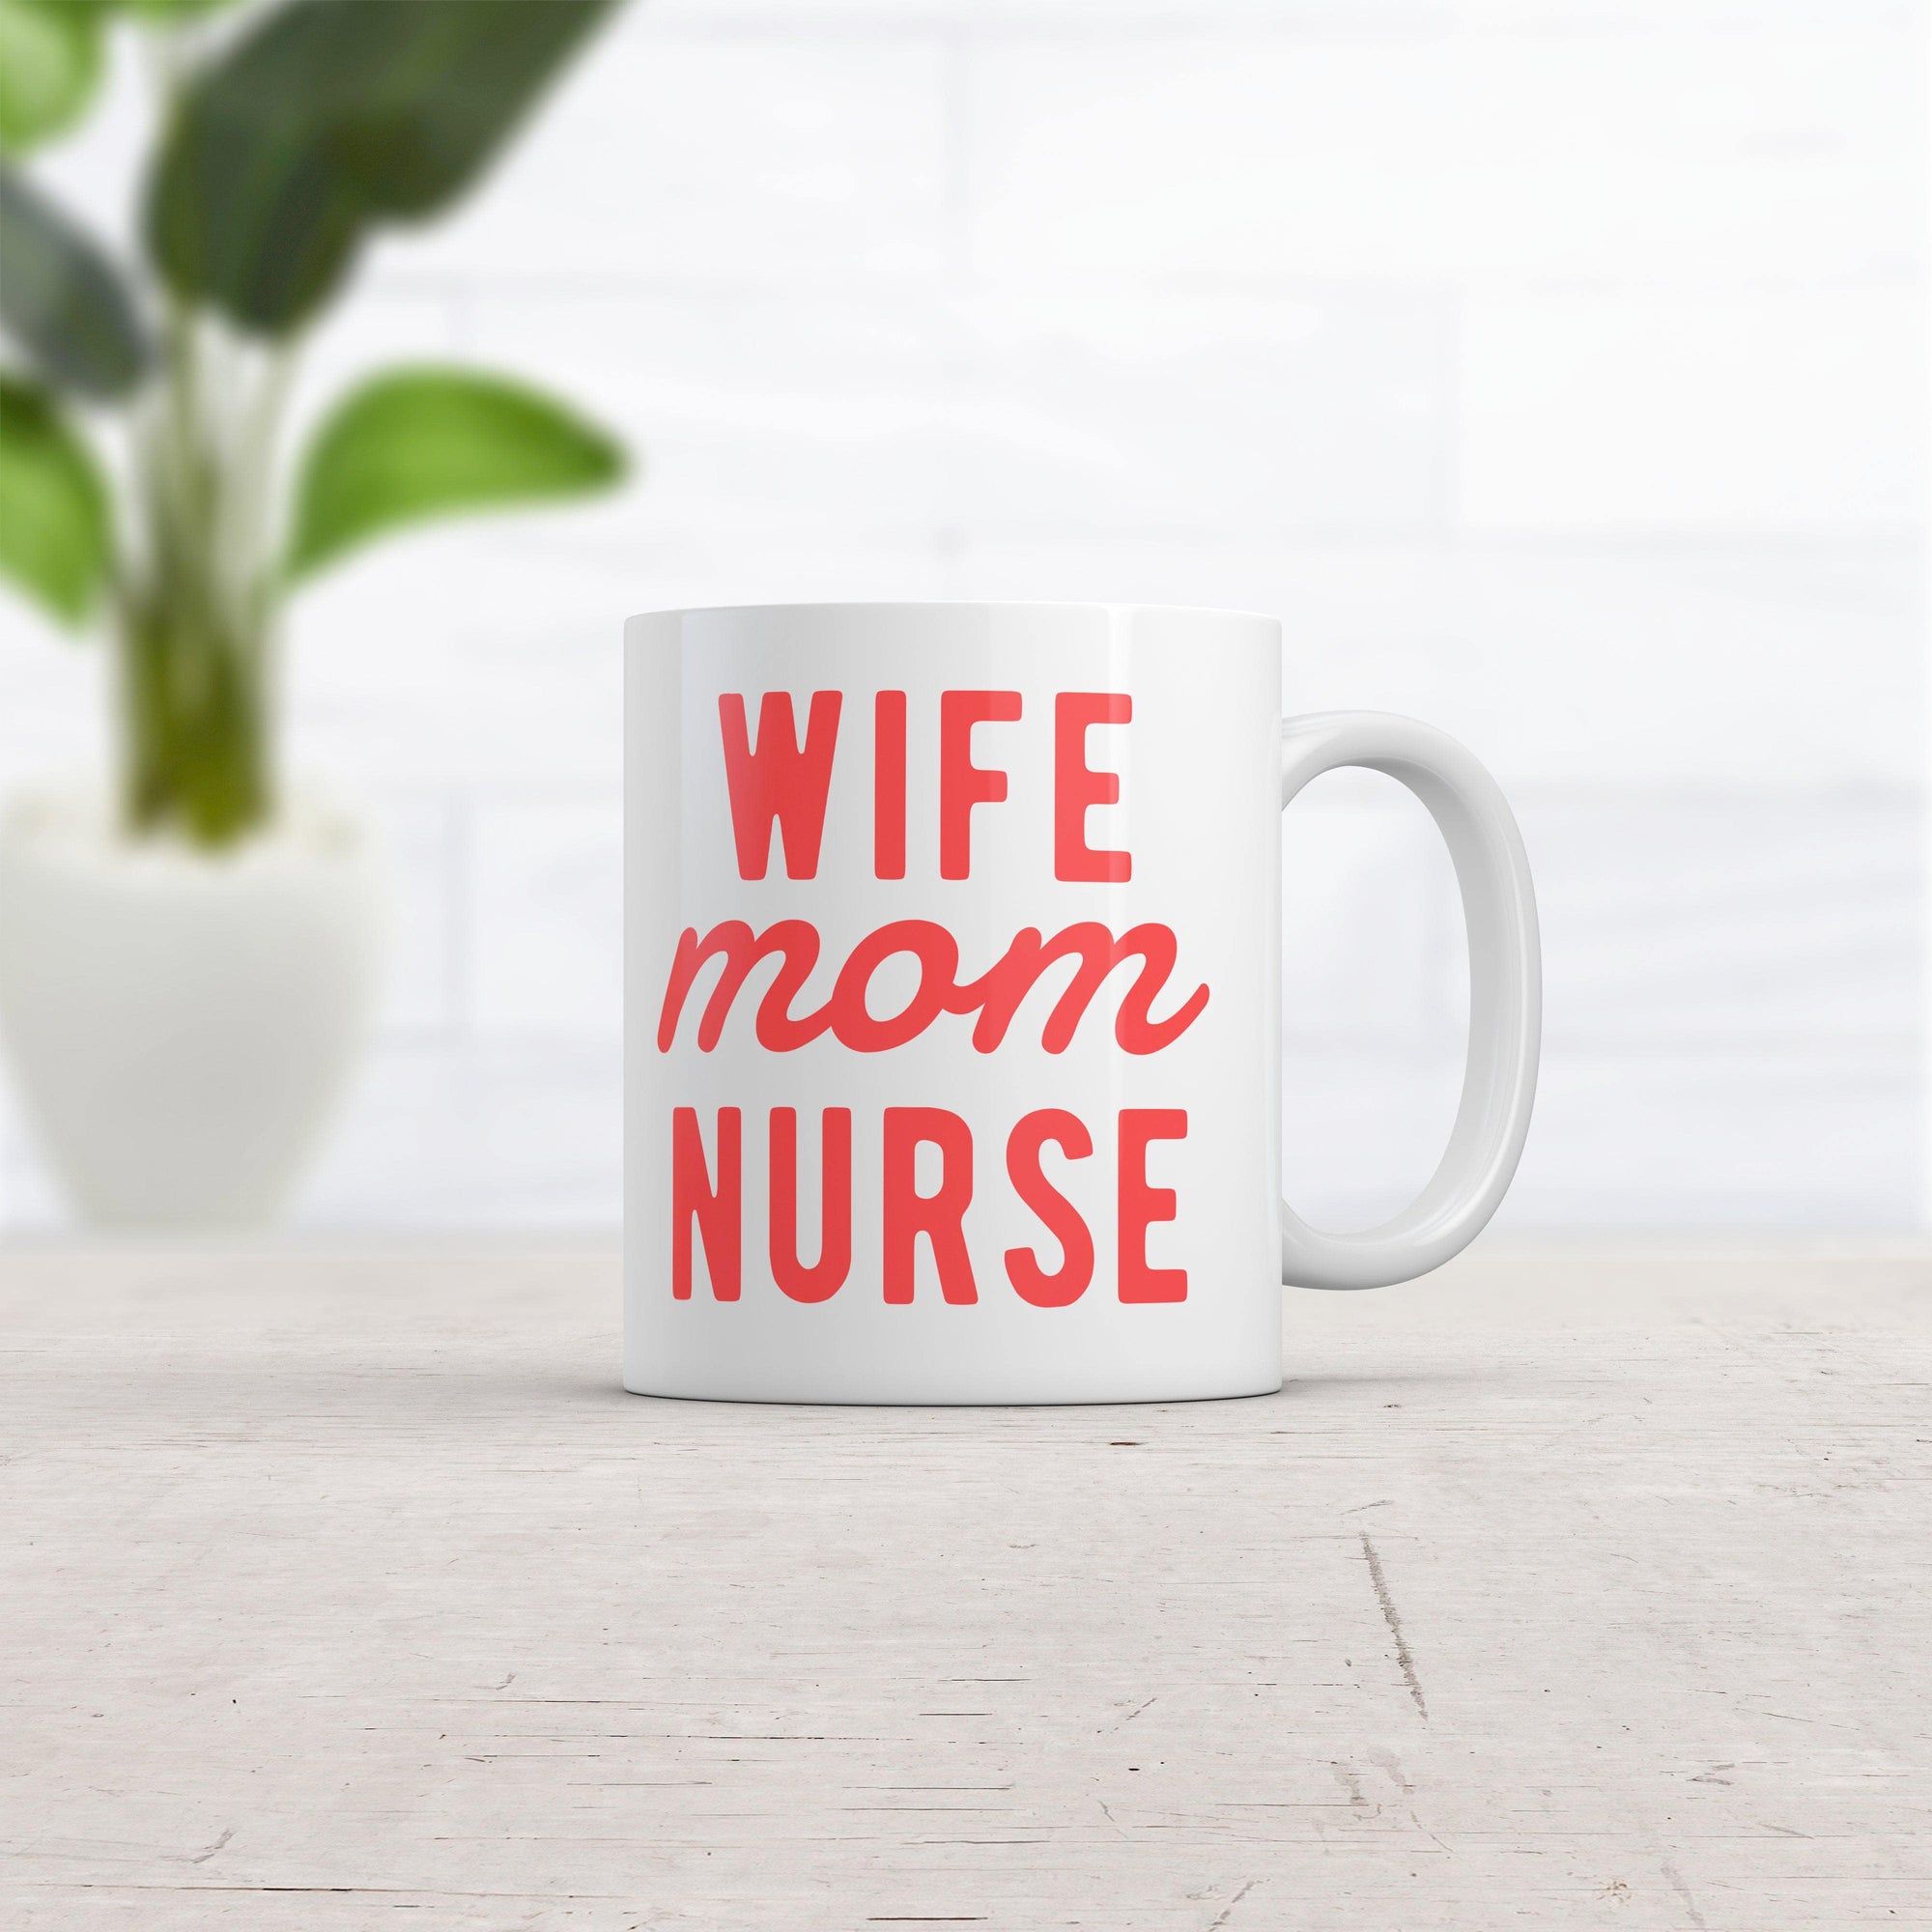 Wife Mom Nurse Mug Cute Mother Spouse Nursing Graphic Novelty Coffee Cup-11oz  -  Crazy Dog T-Shirts